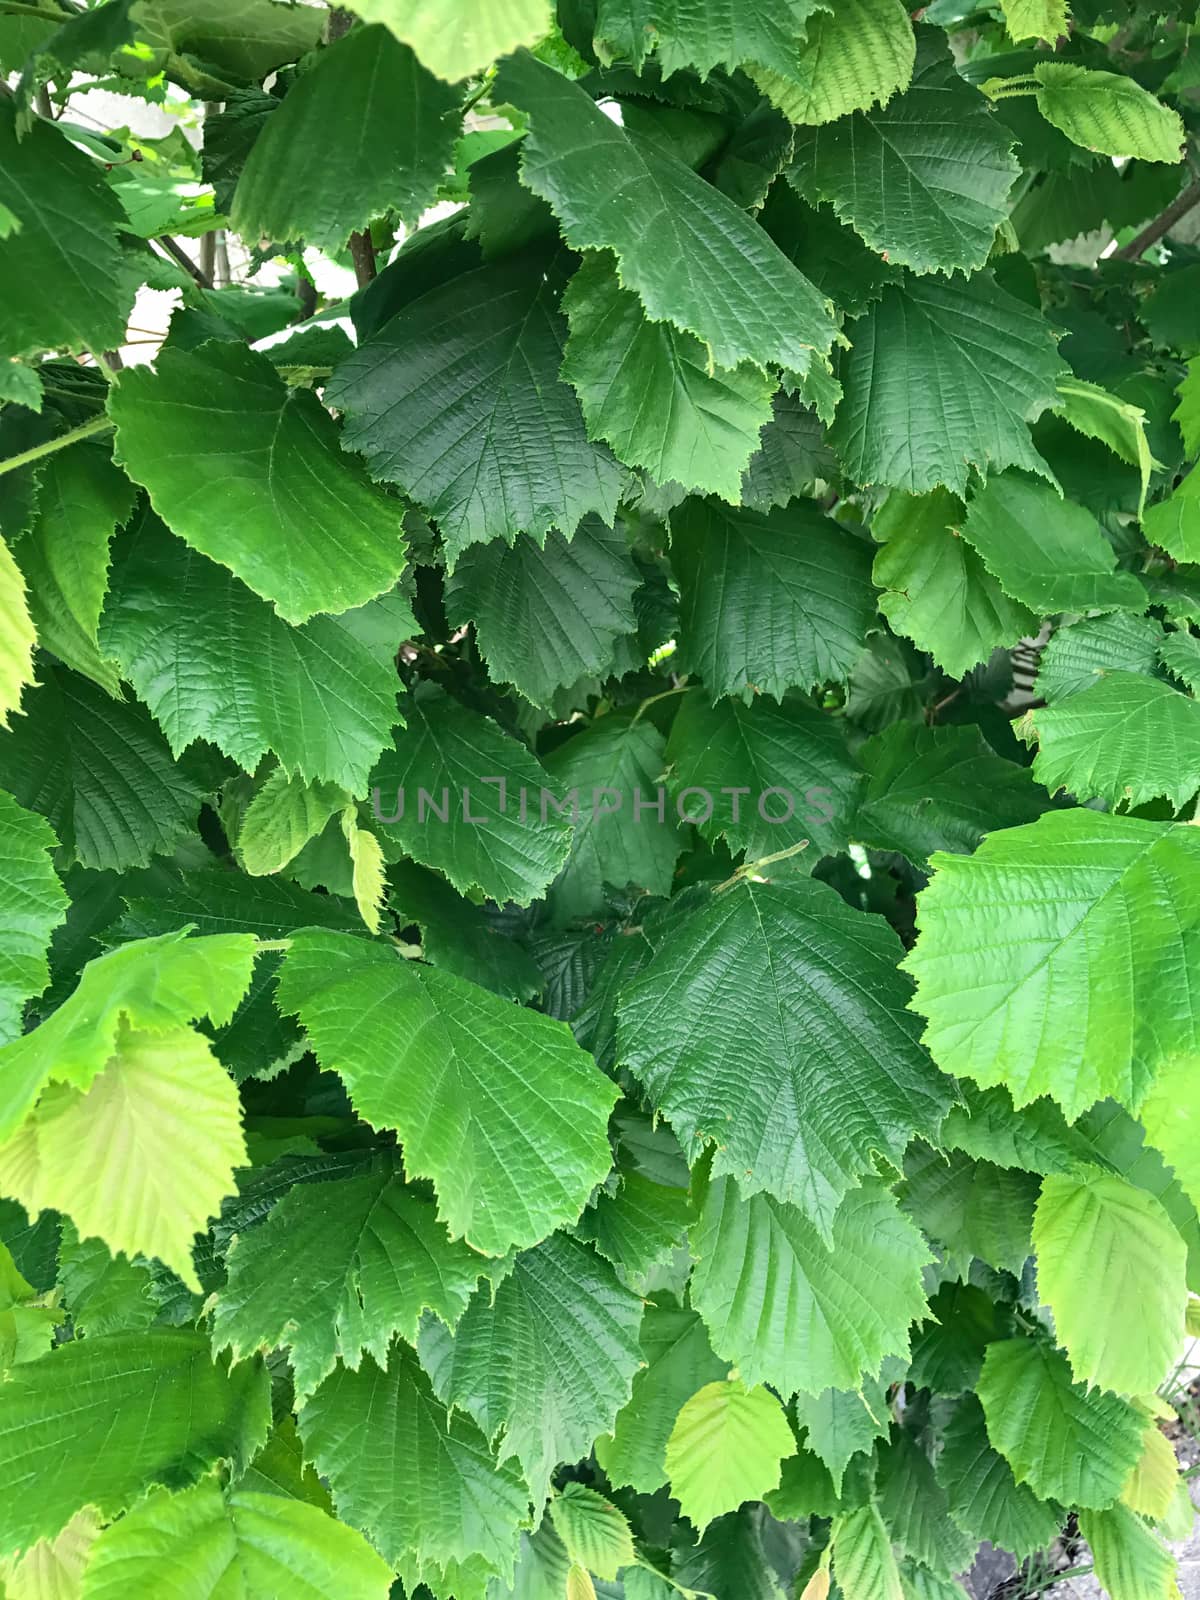 hazelnut tree and leaves